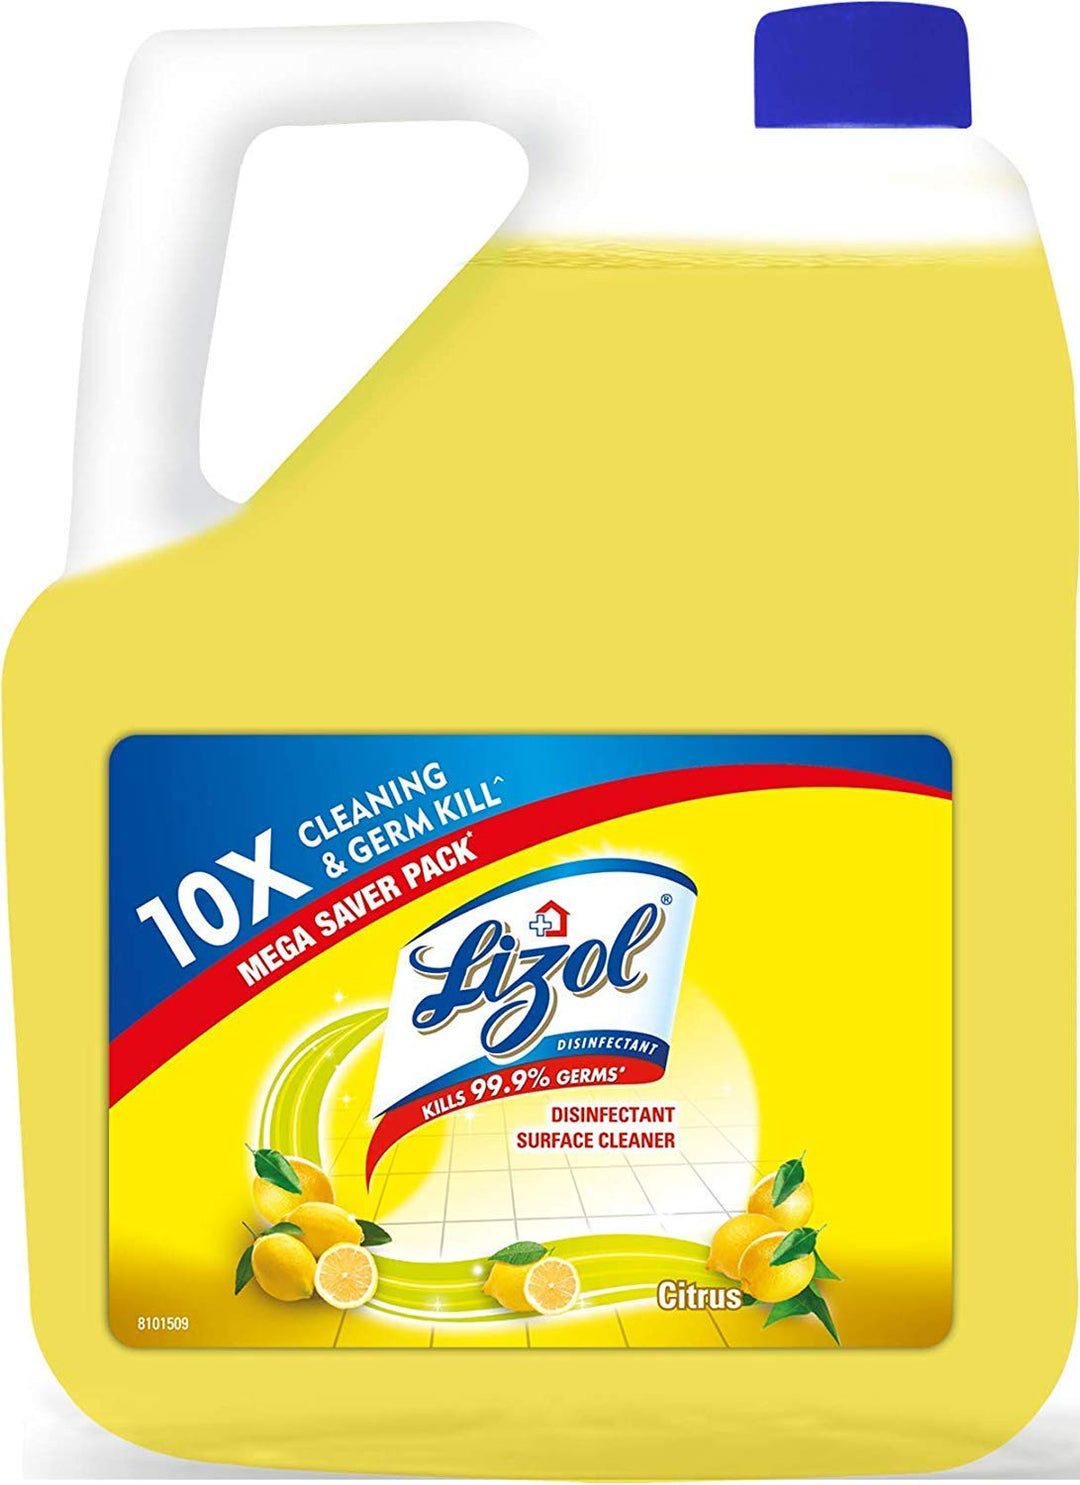 Lizol Disinfectant Surface Cleaner Citrus 5ltr